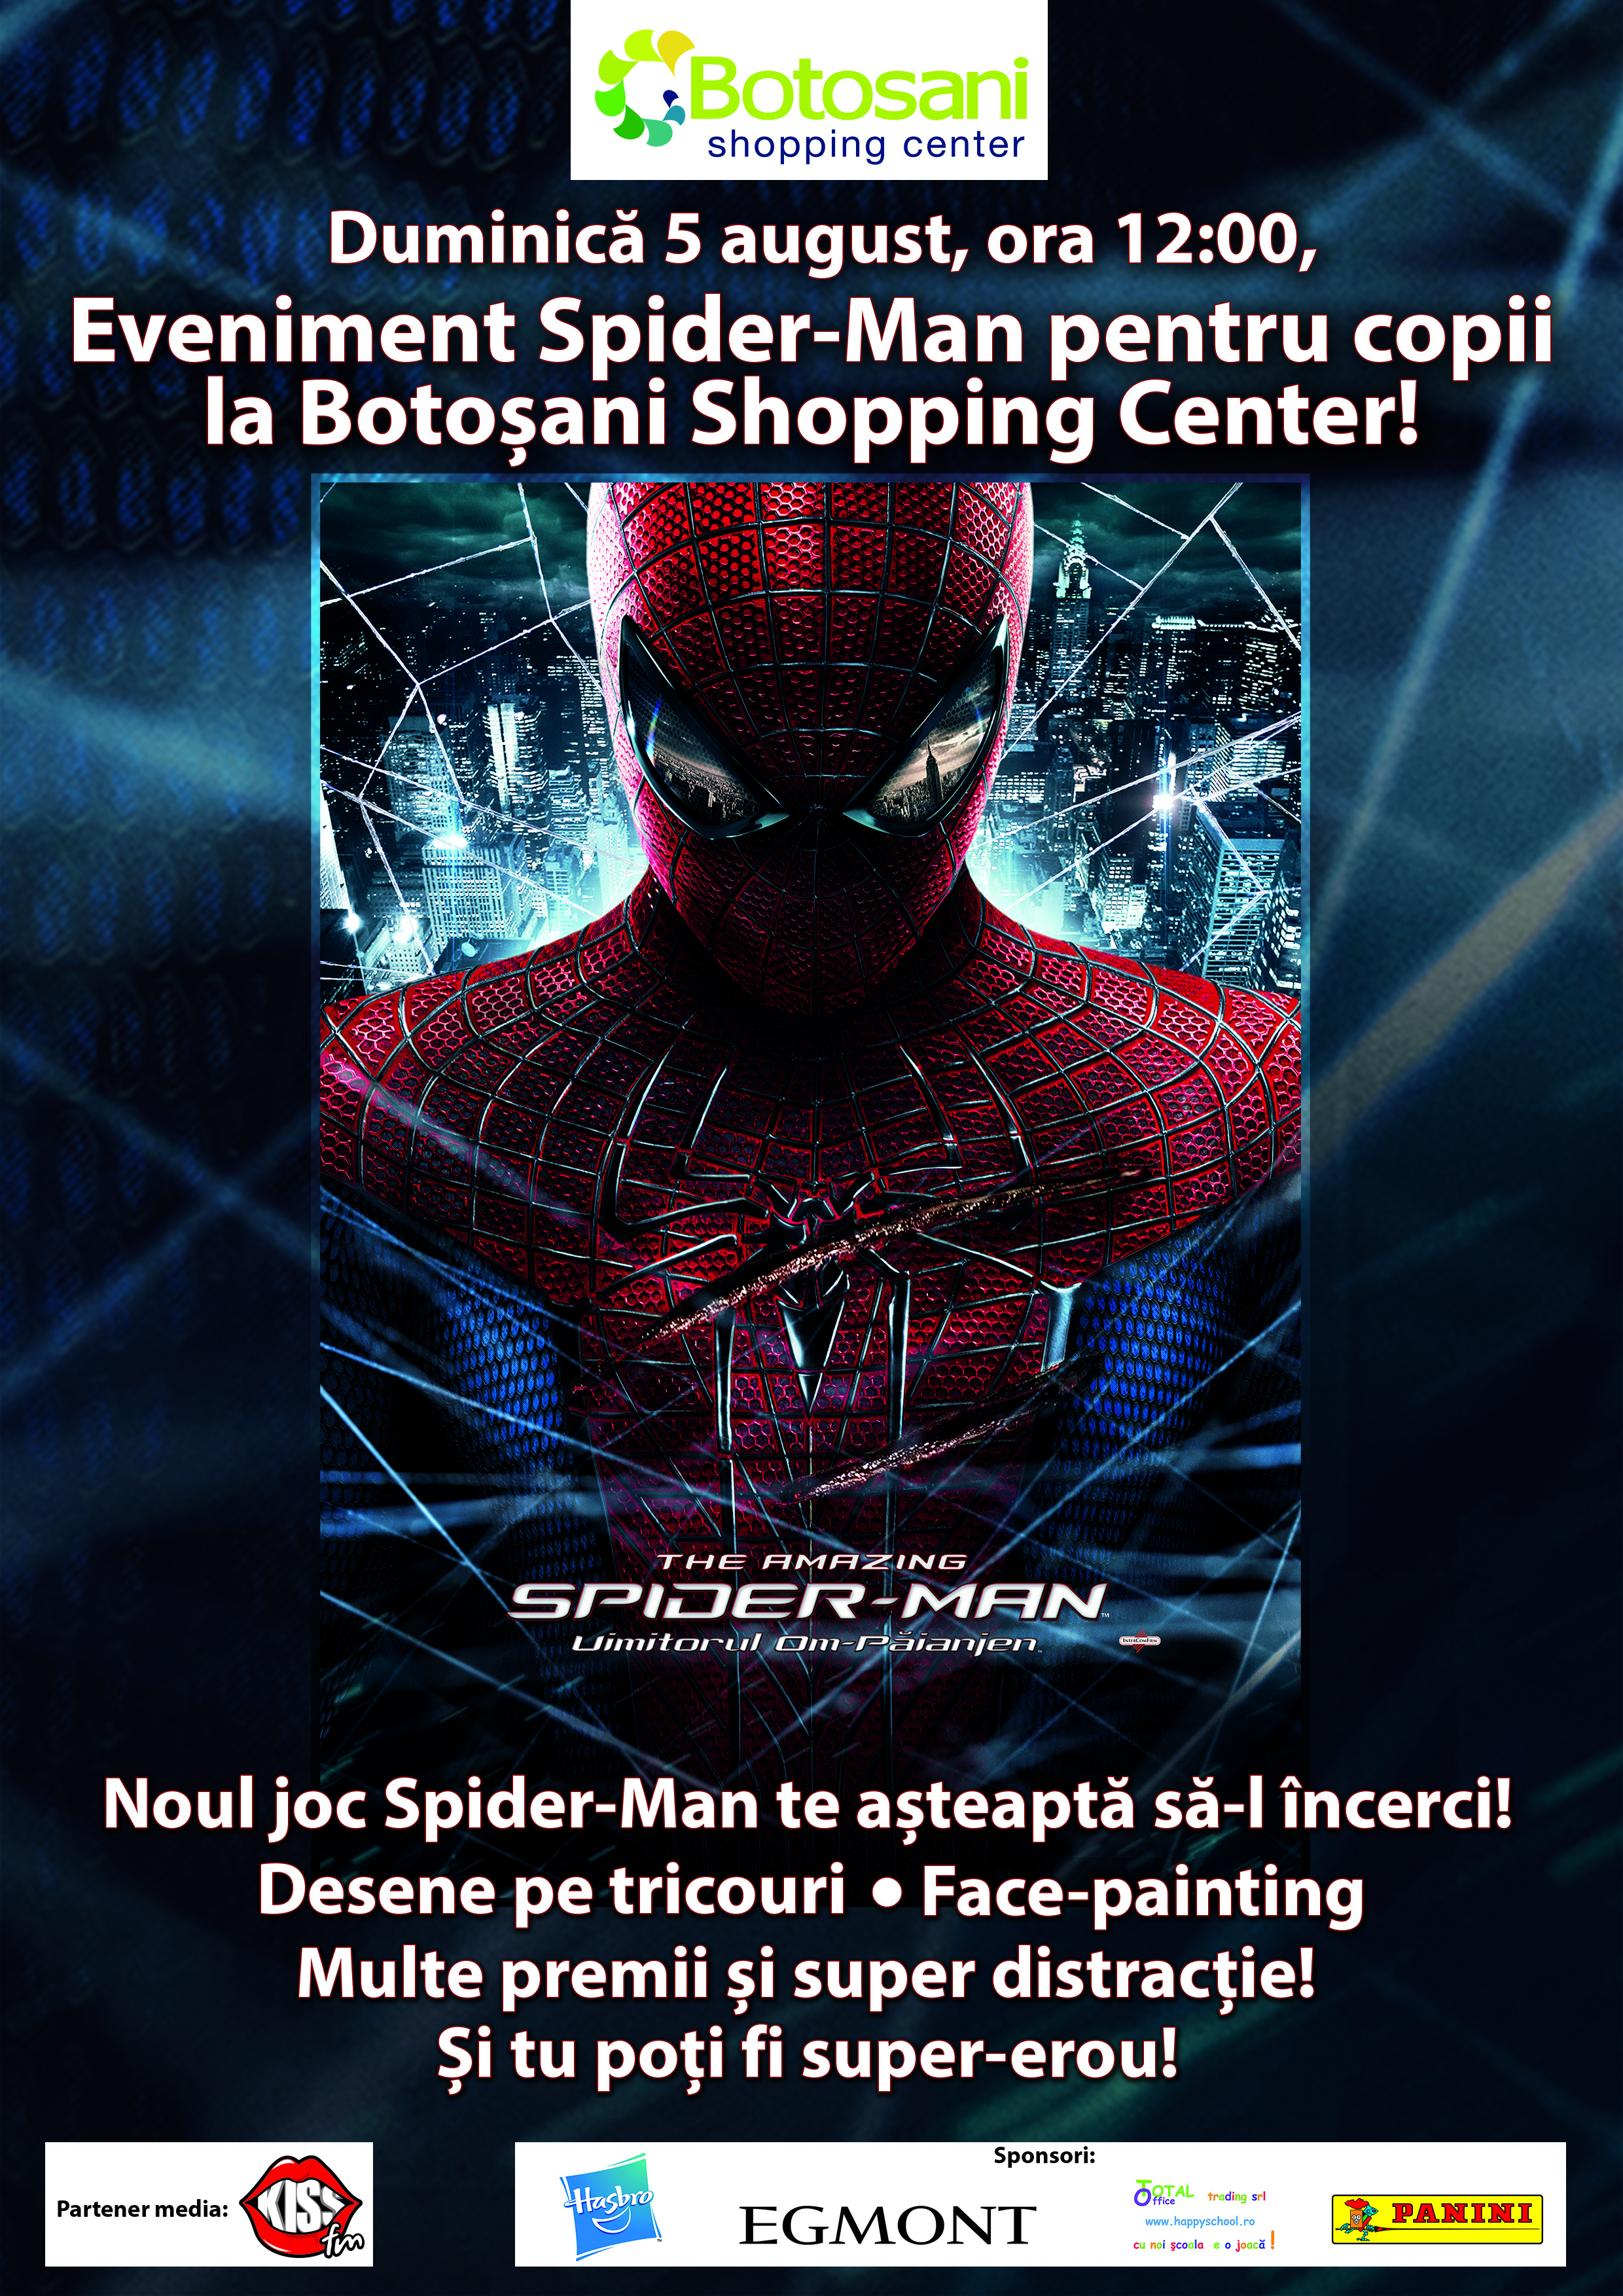 In weekend, eveniment Spider-MAN pentru copiii din Botosani la Botosani Shopping Center